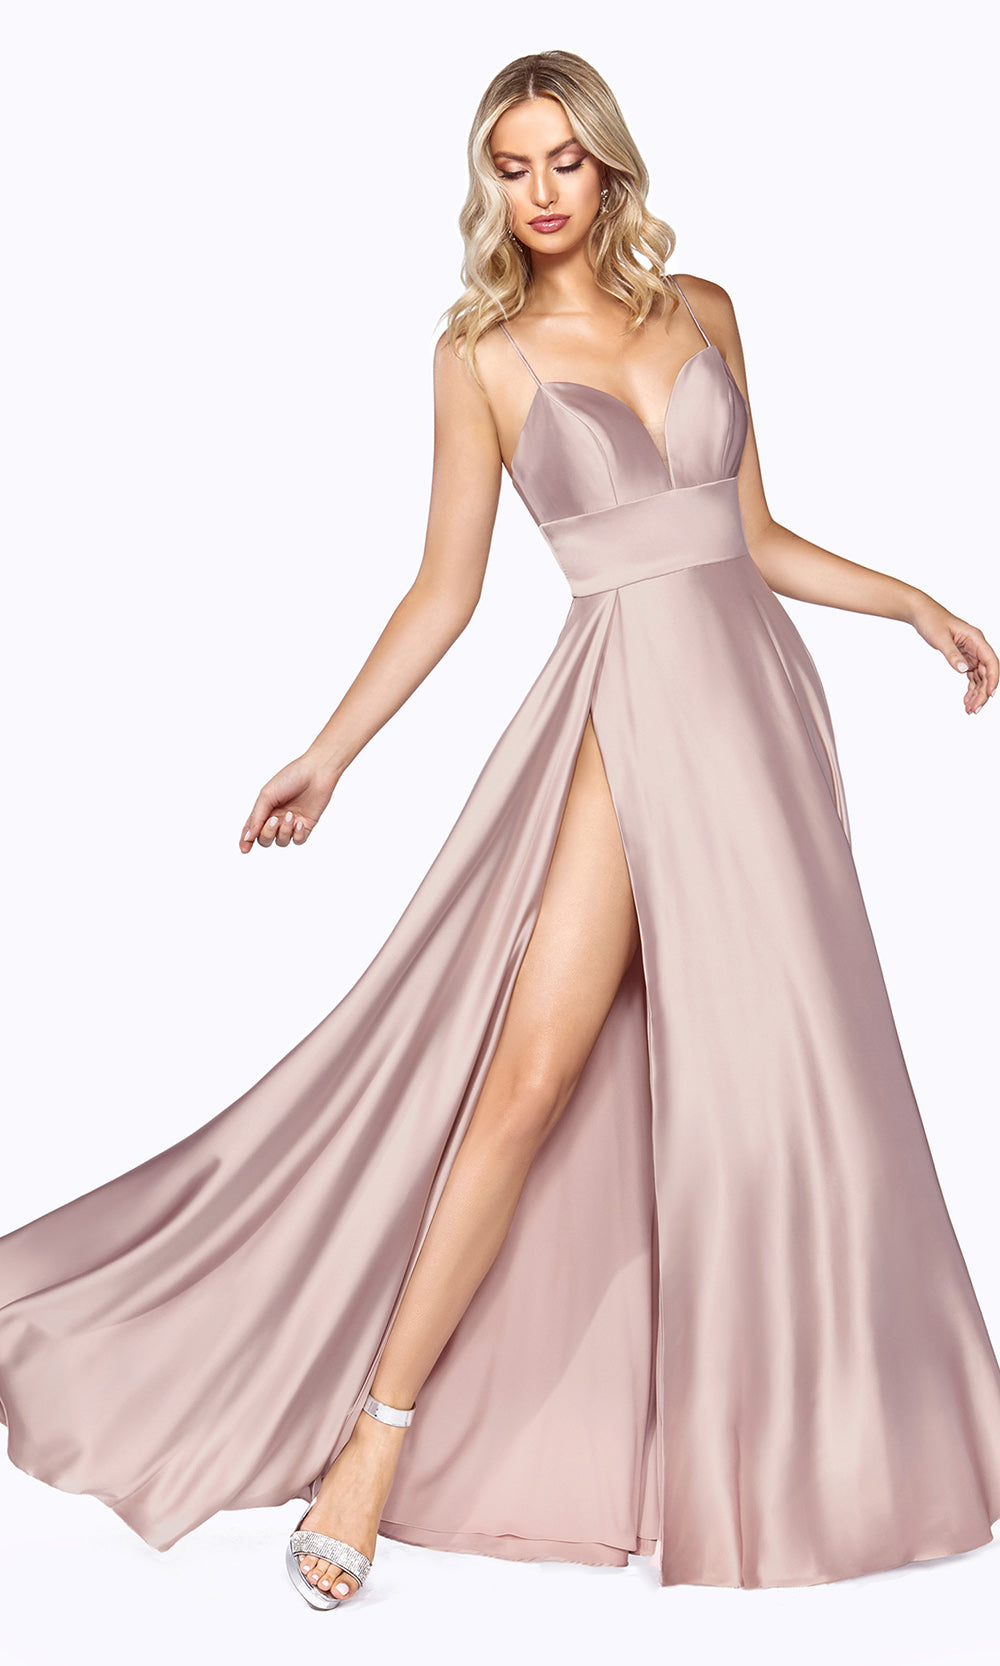 Cinderella Divine CJ523 long blush pink or light pink satin dress with v neck, straps, & high slit. Plus sizes available.jpg